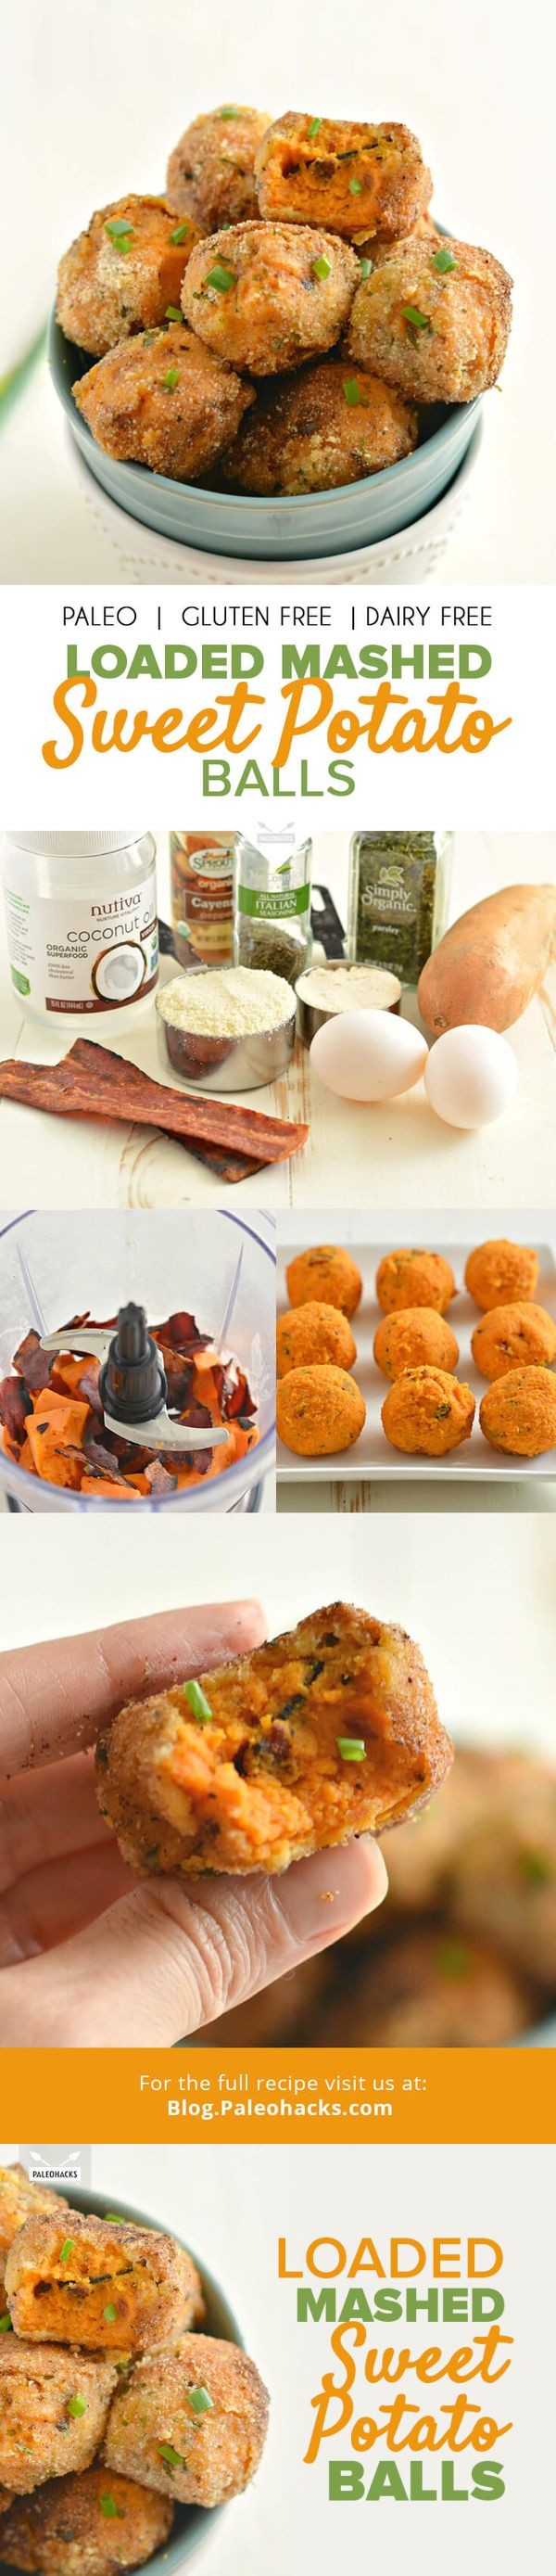 Loaded Mashed Sweet Potato Balls Recipe by Megan Olson